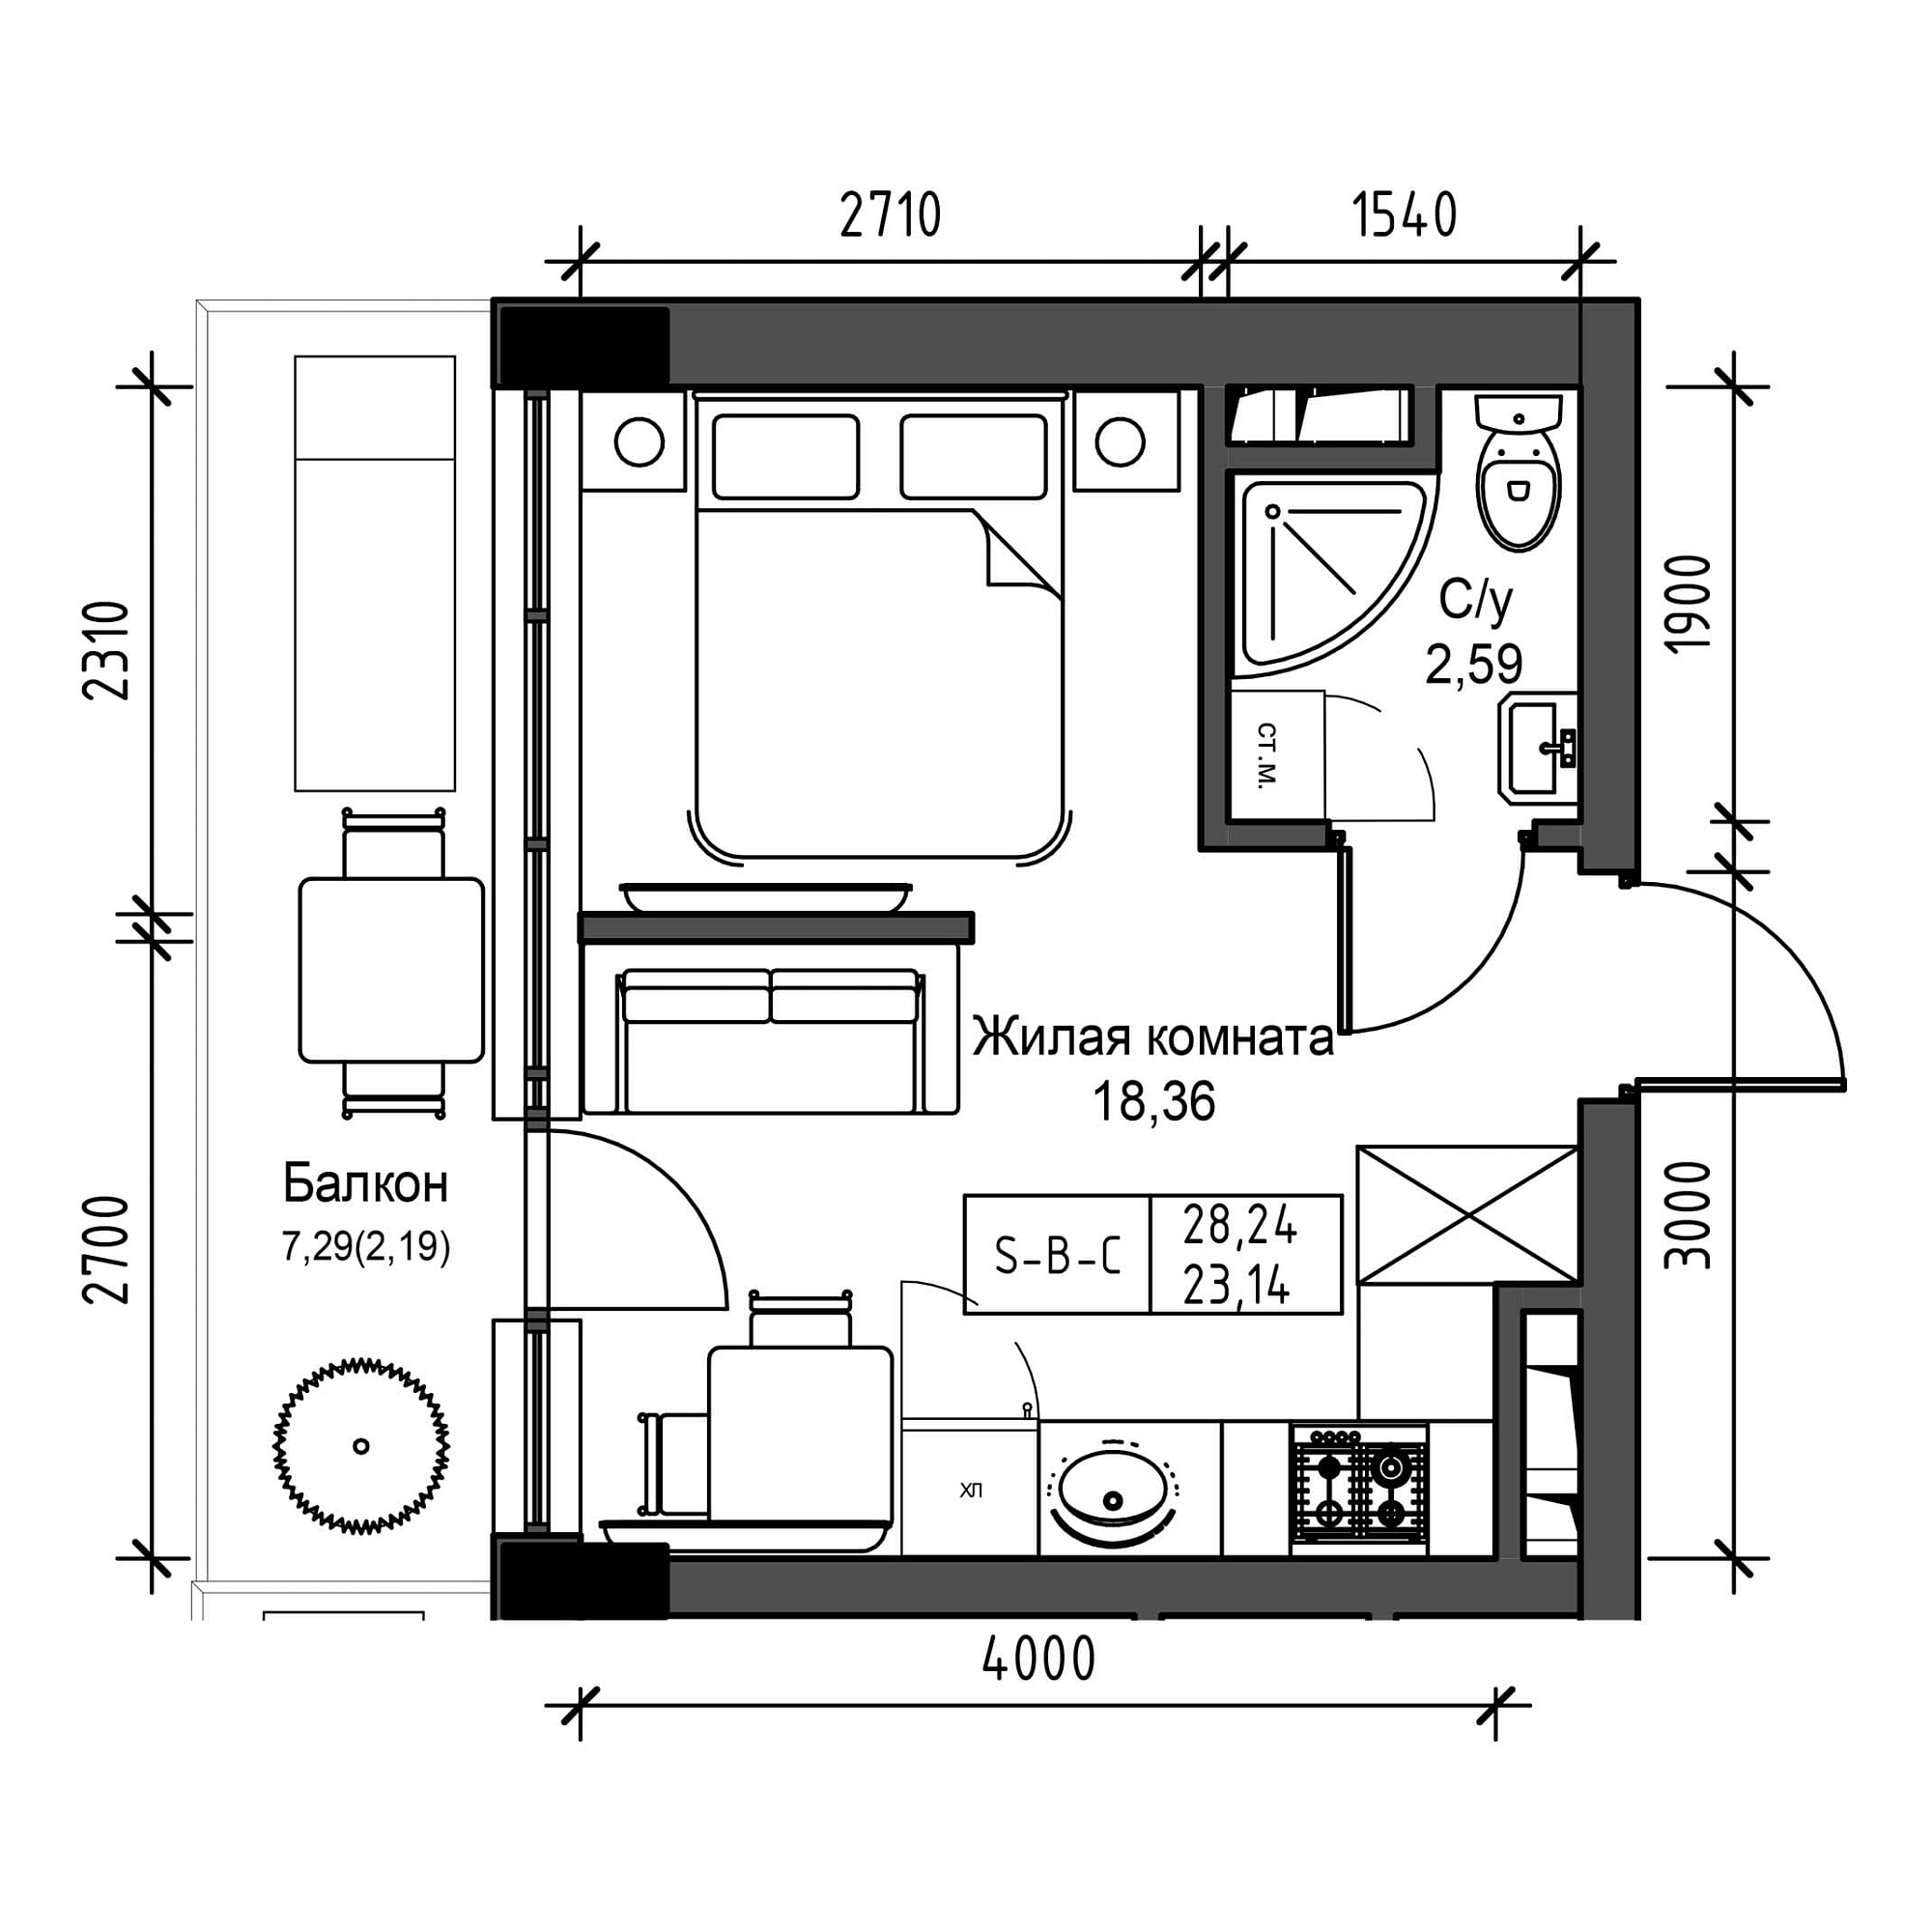 Планування Smart-квартира площею 23.14м2, UM-001-09/0013.